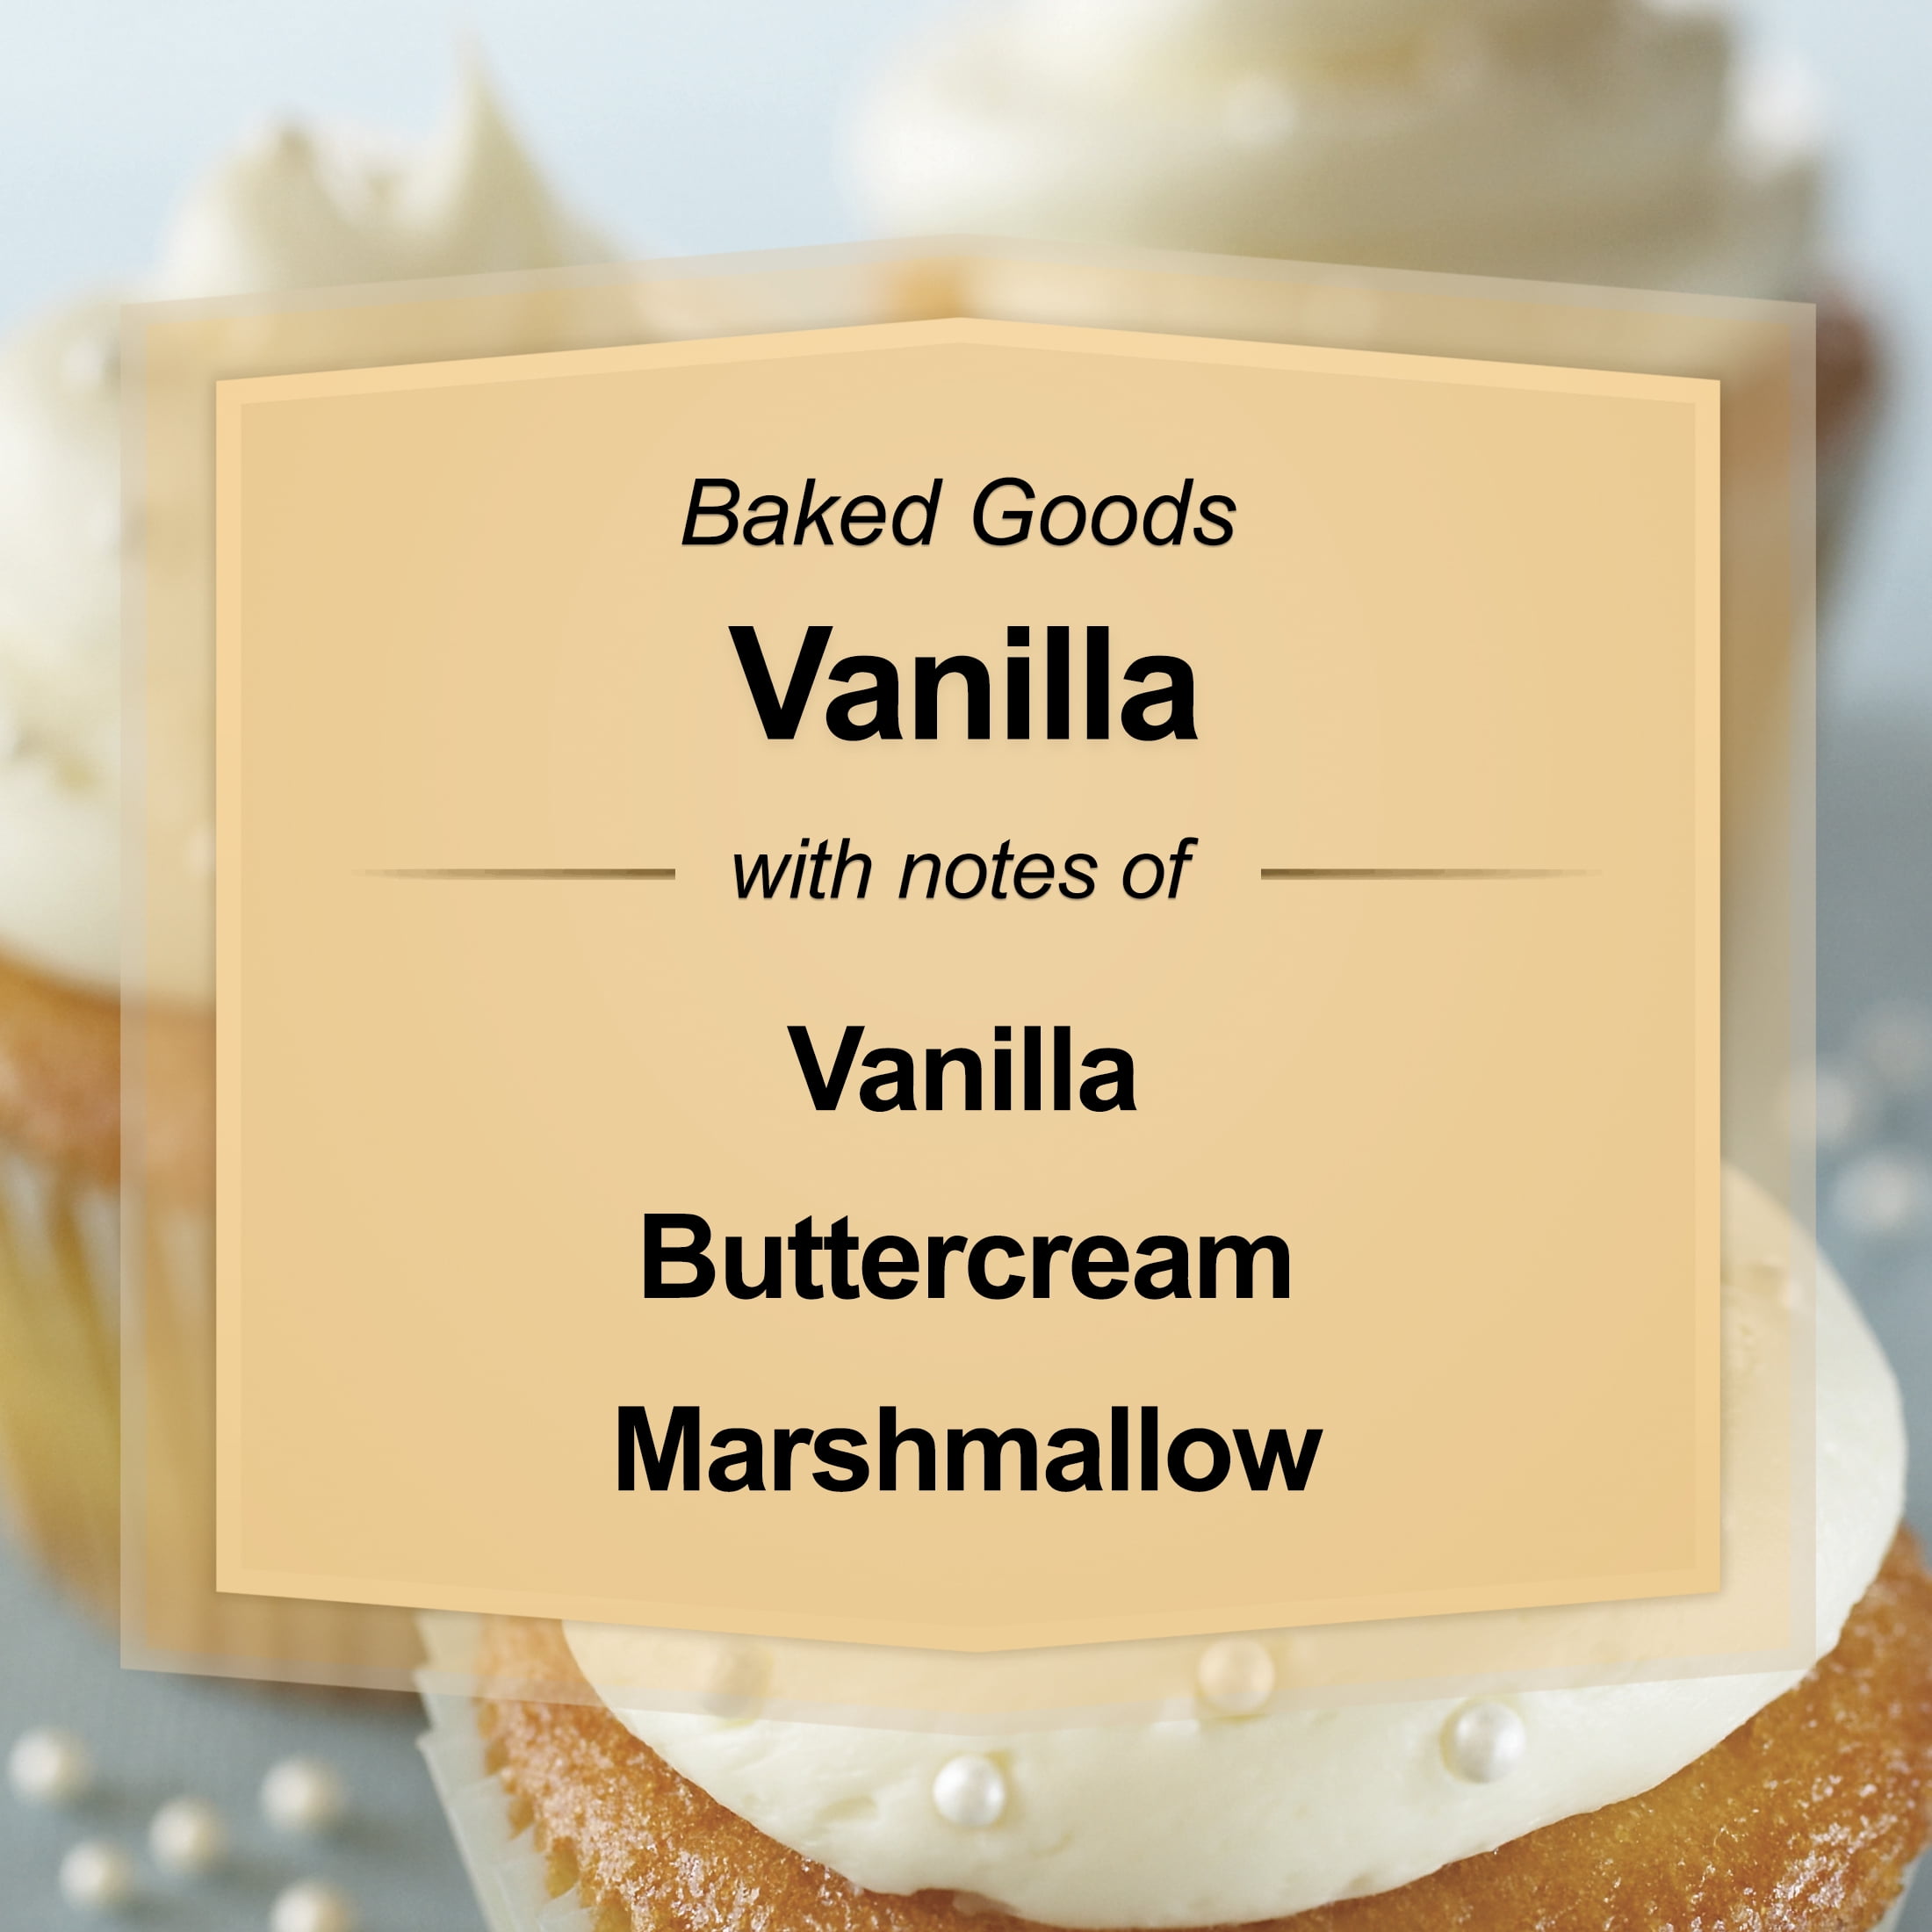 Vanilla Wax Melts - Mainstays Review - Candlefind